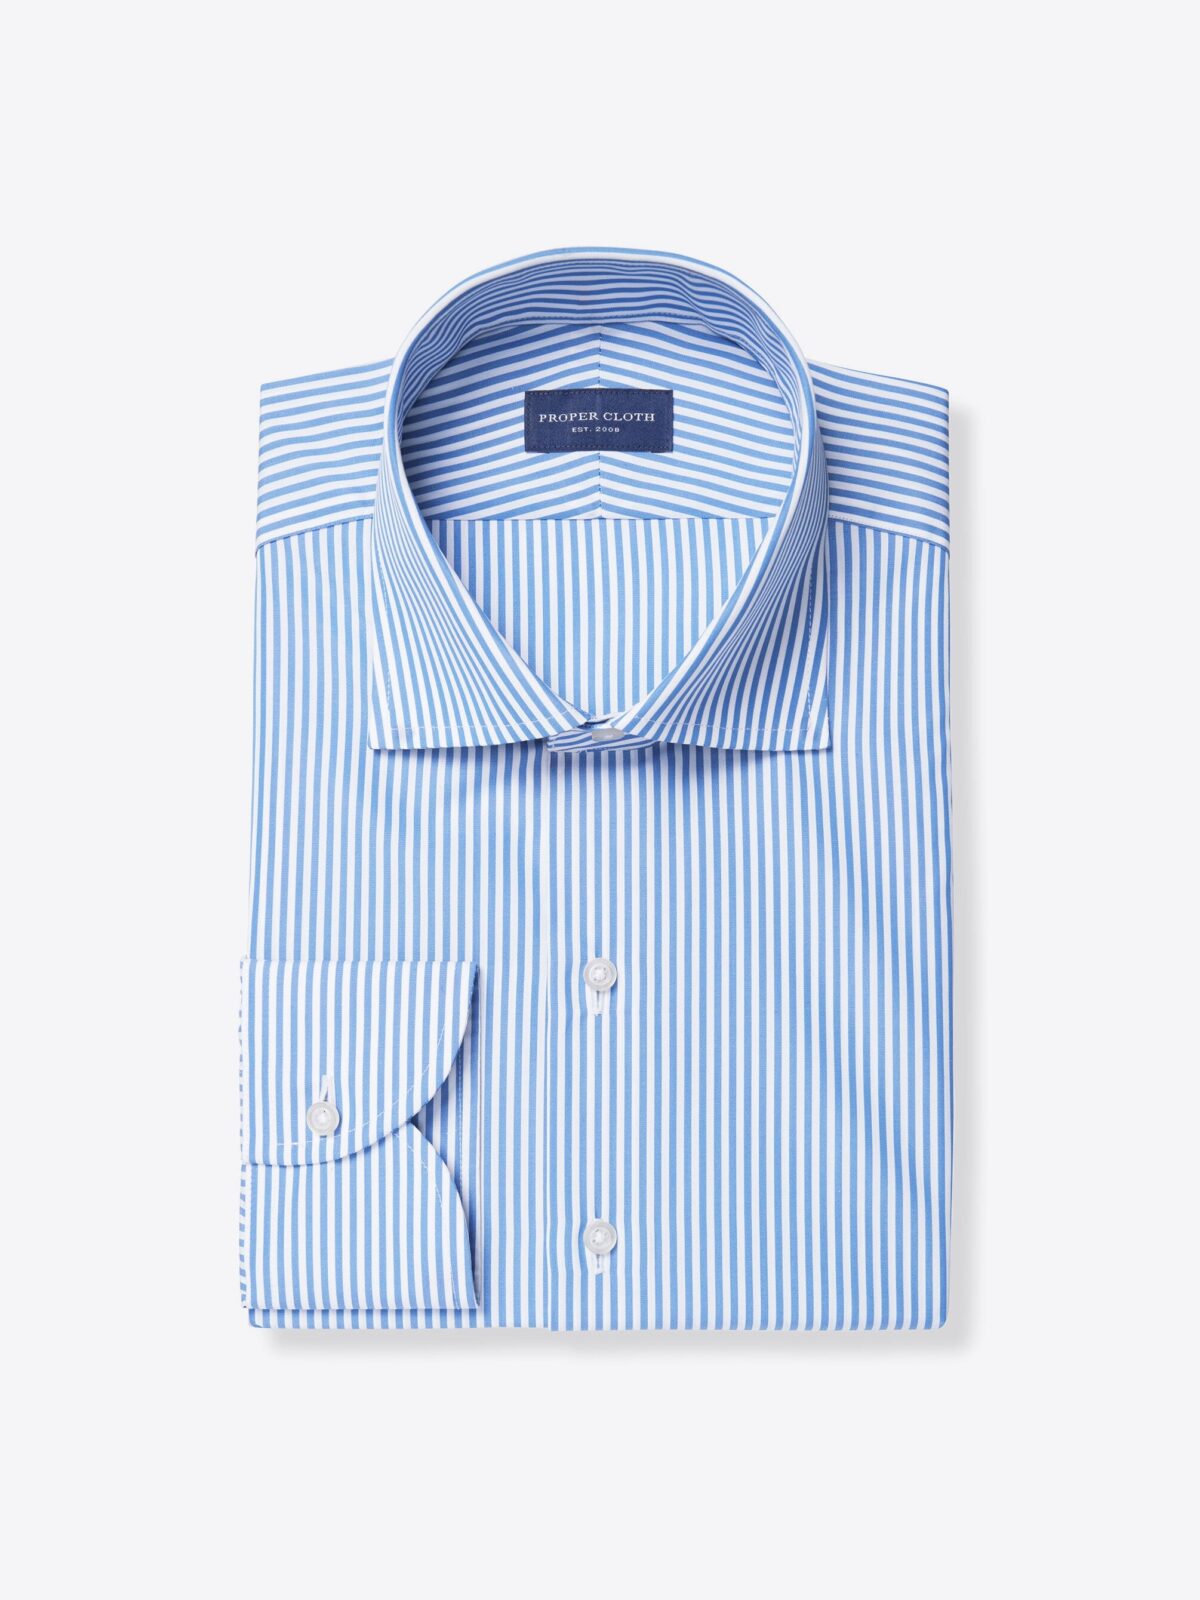 Stanton 120s Royal Blue Bengal Stripe Dress Shirt Shirt by Proper Cloth